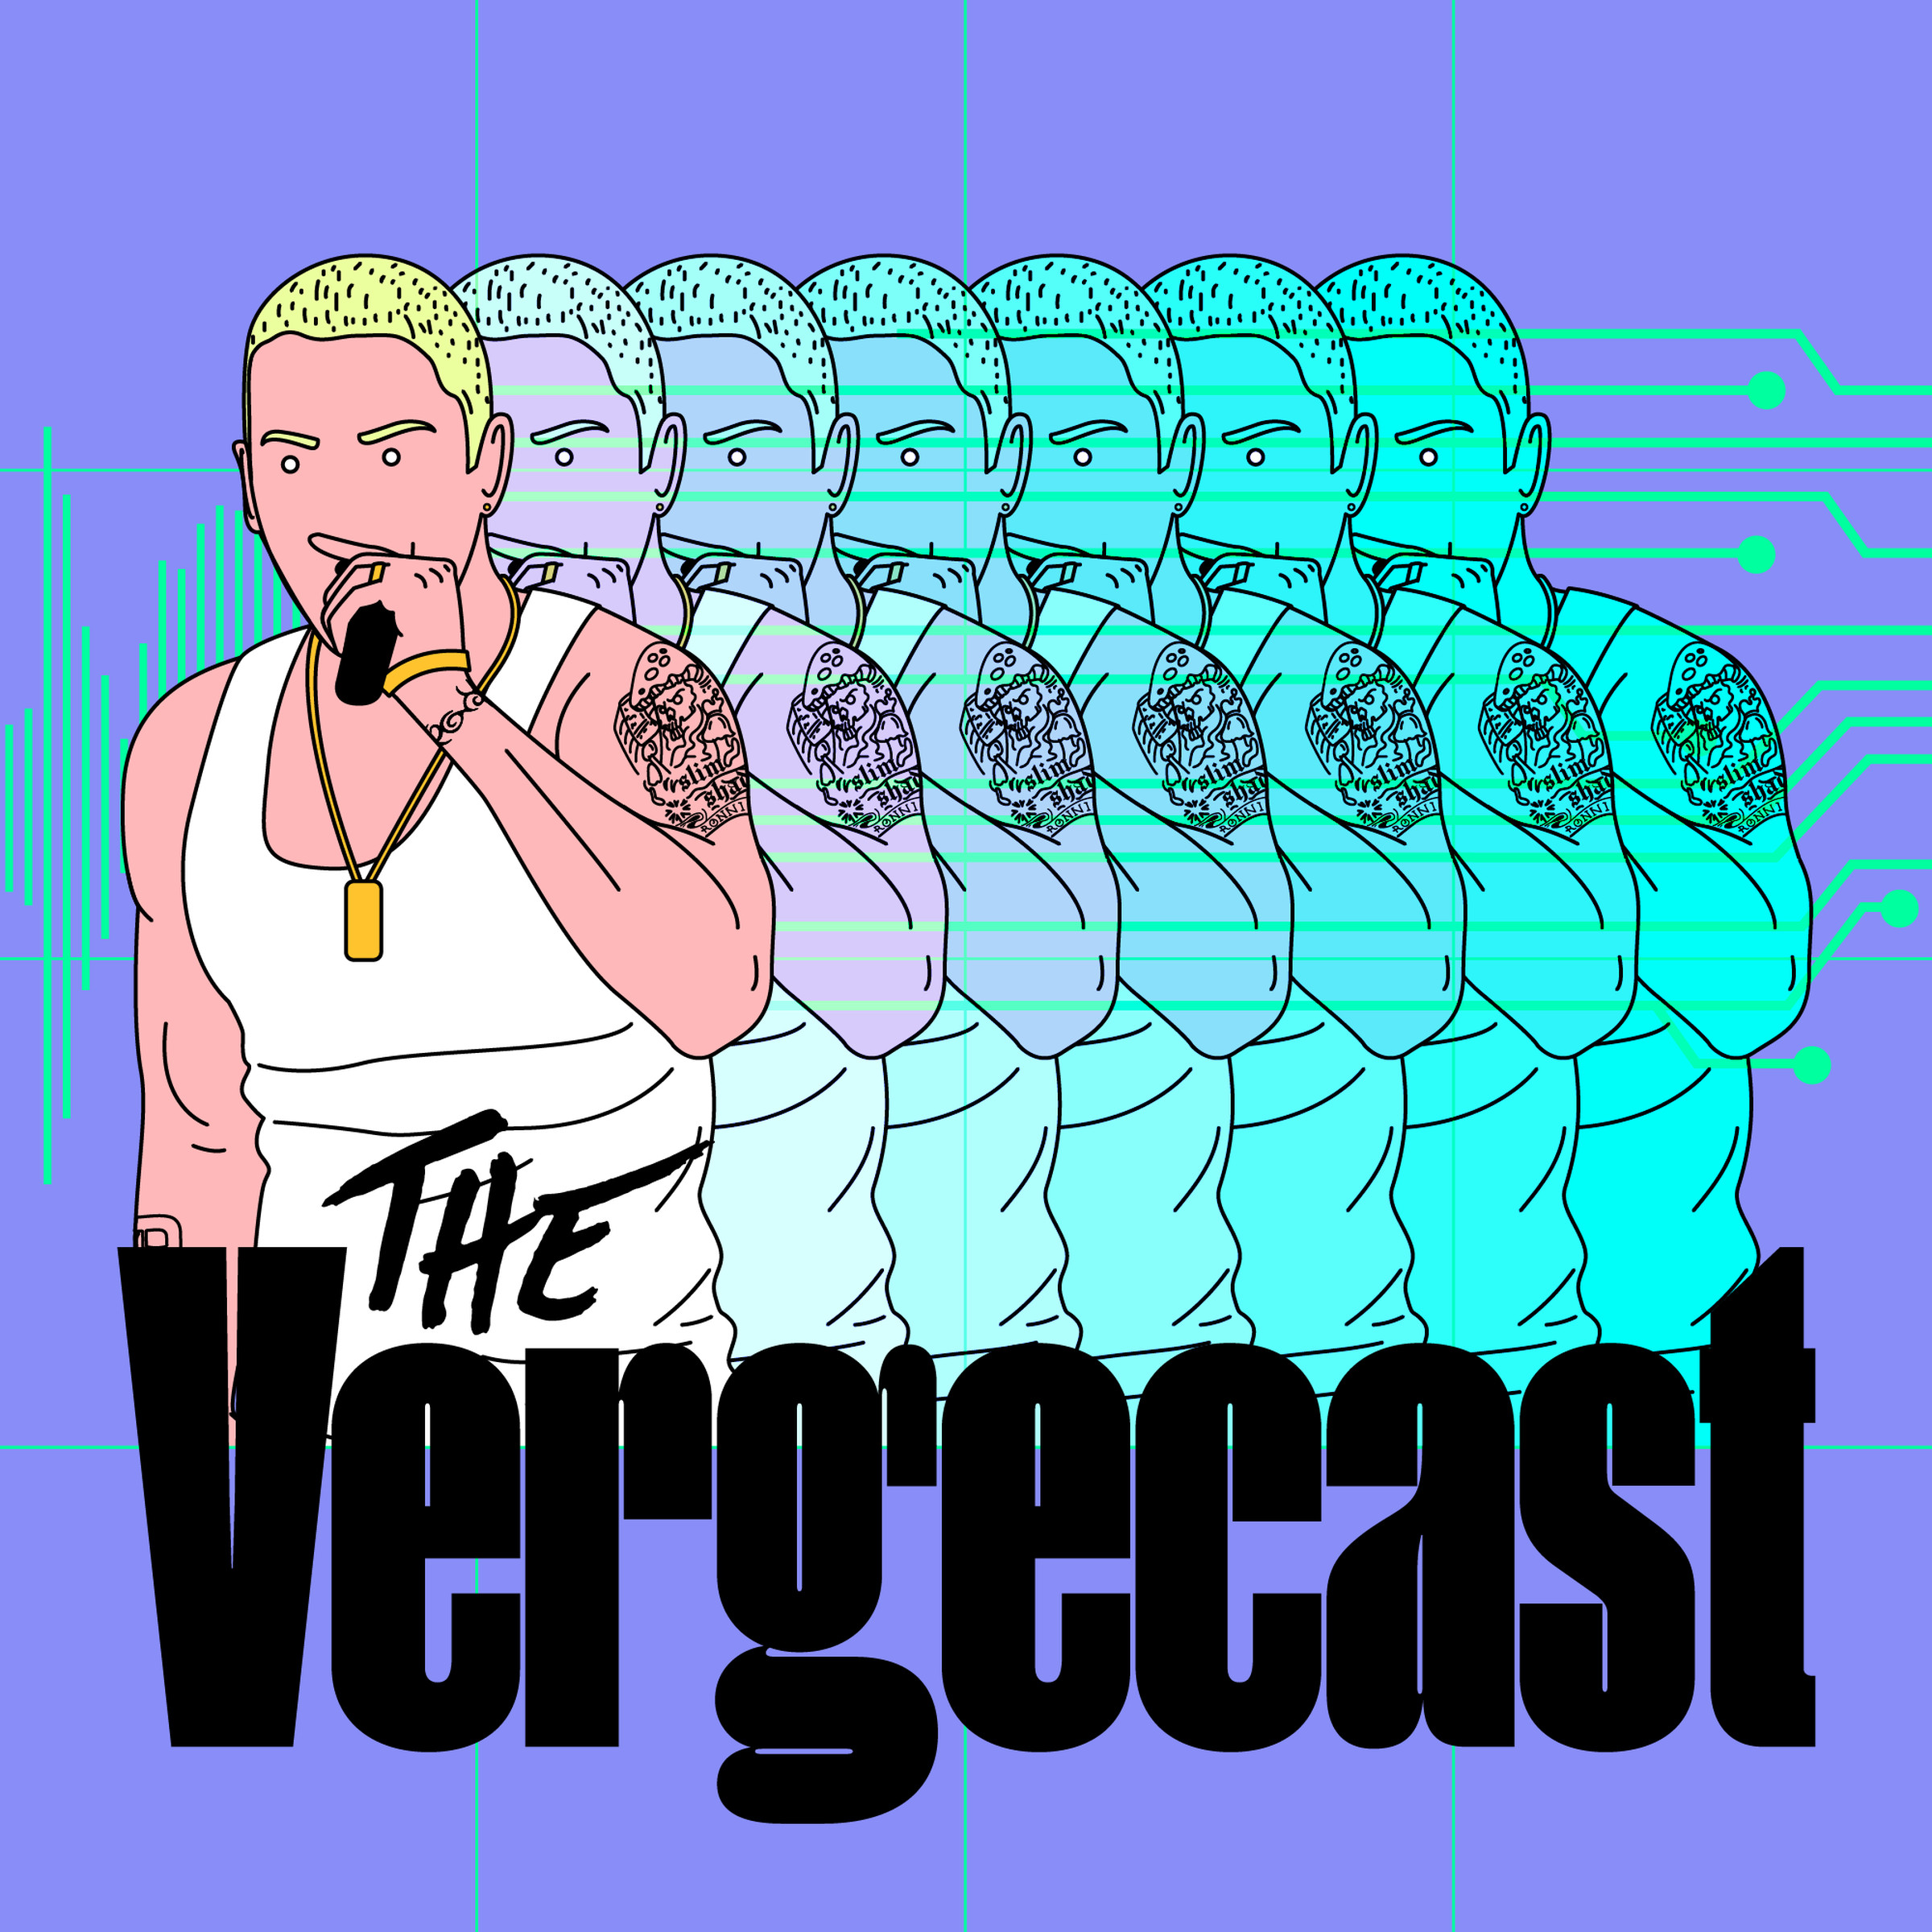 Illustration of the Vergecast logo